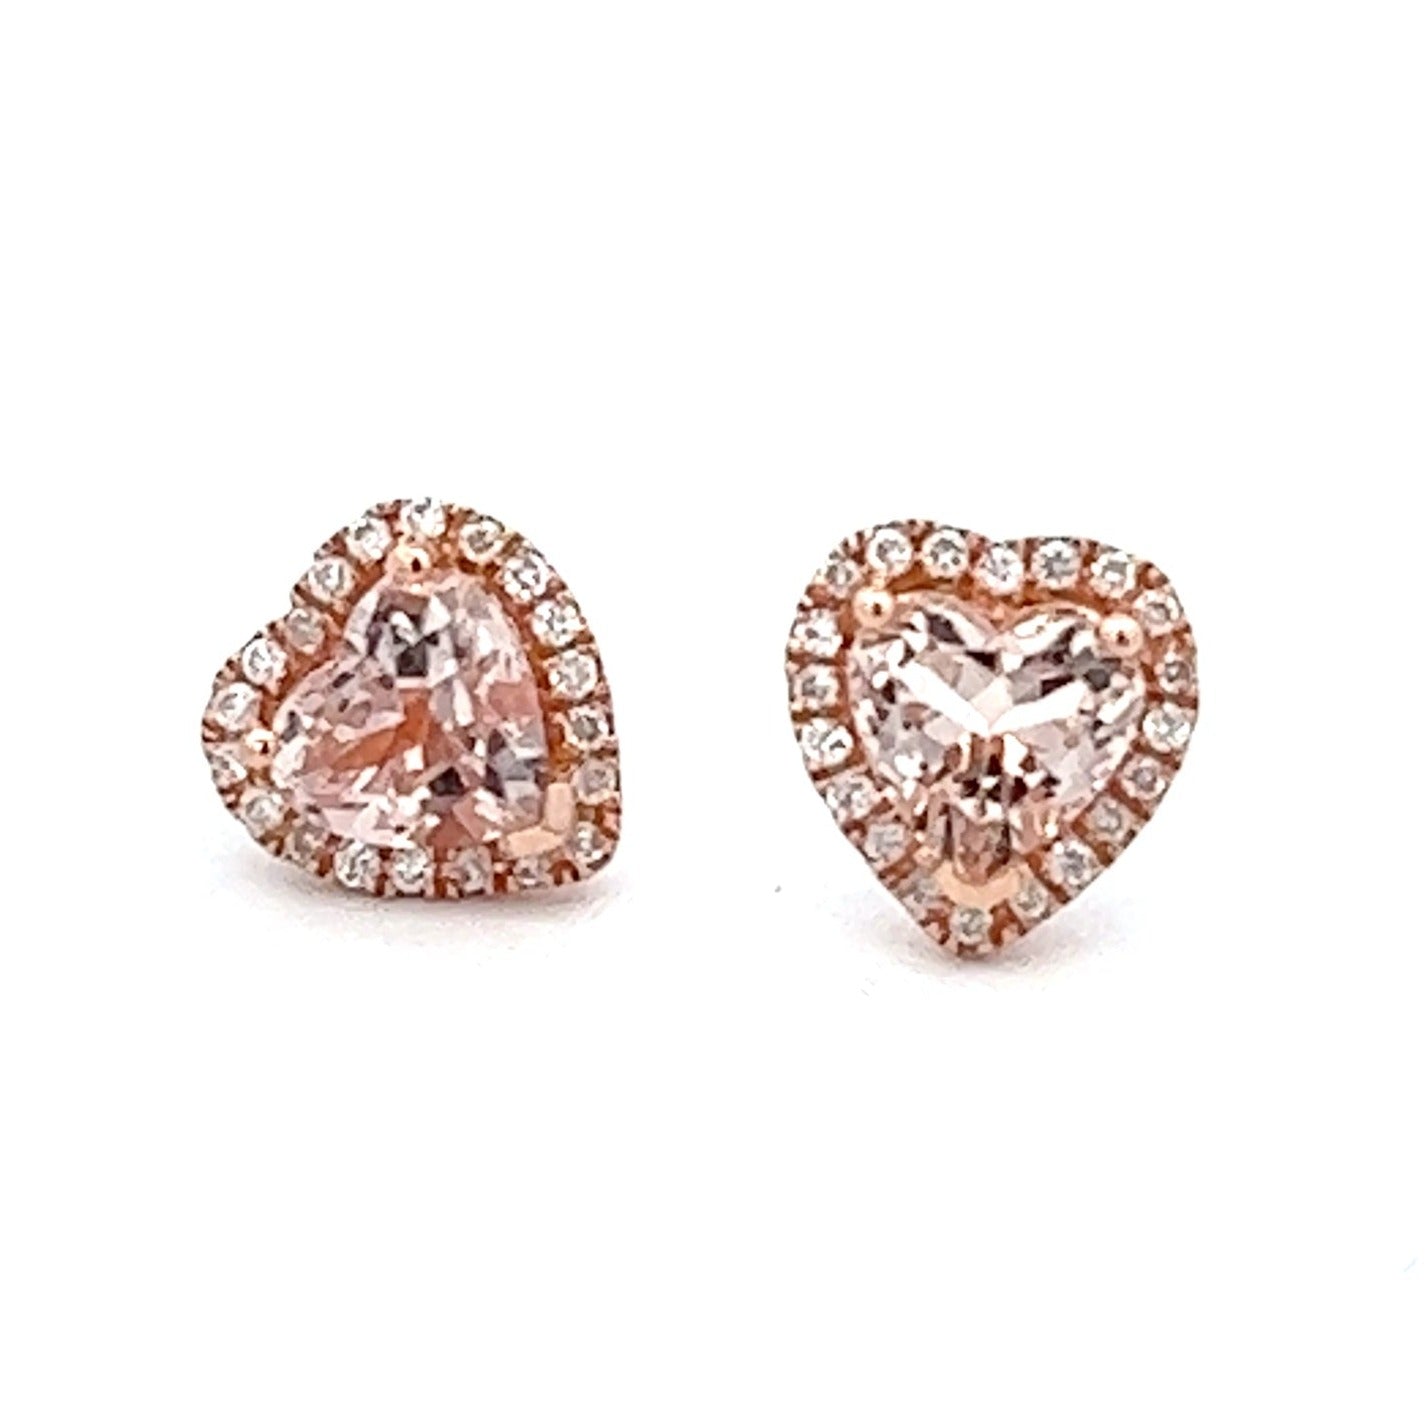 1.10cttw Morganite Heart Earrings in 14k Rose Gold